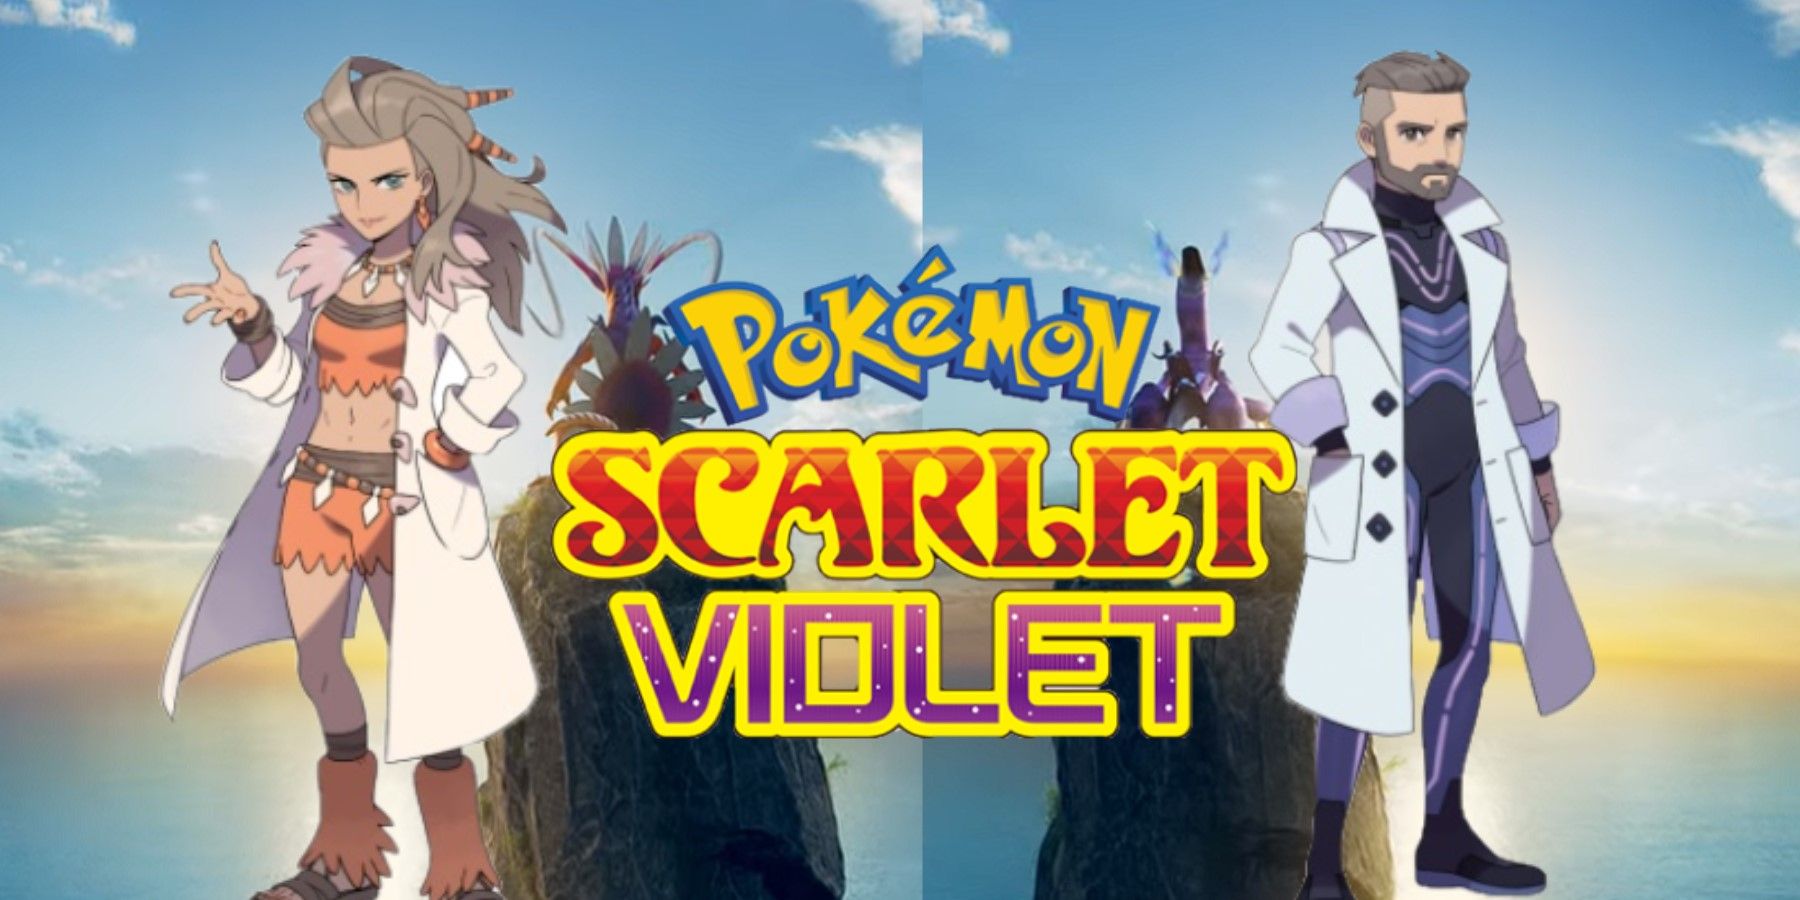 pokemon scarlet violet themes past versus future professor sada professor turo spanish koraidon miraidon japanese plot storyline